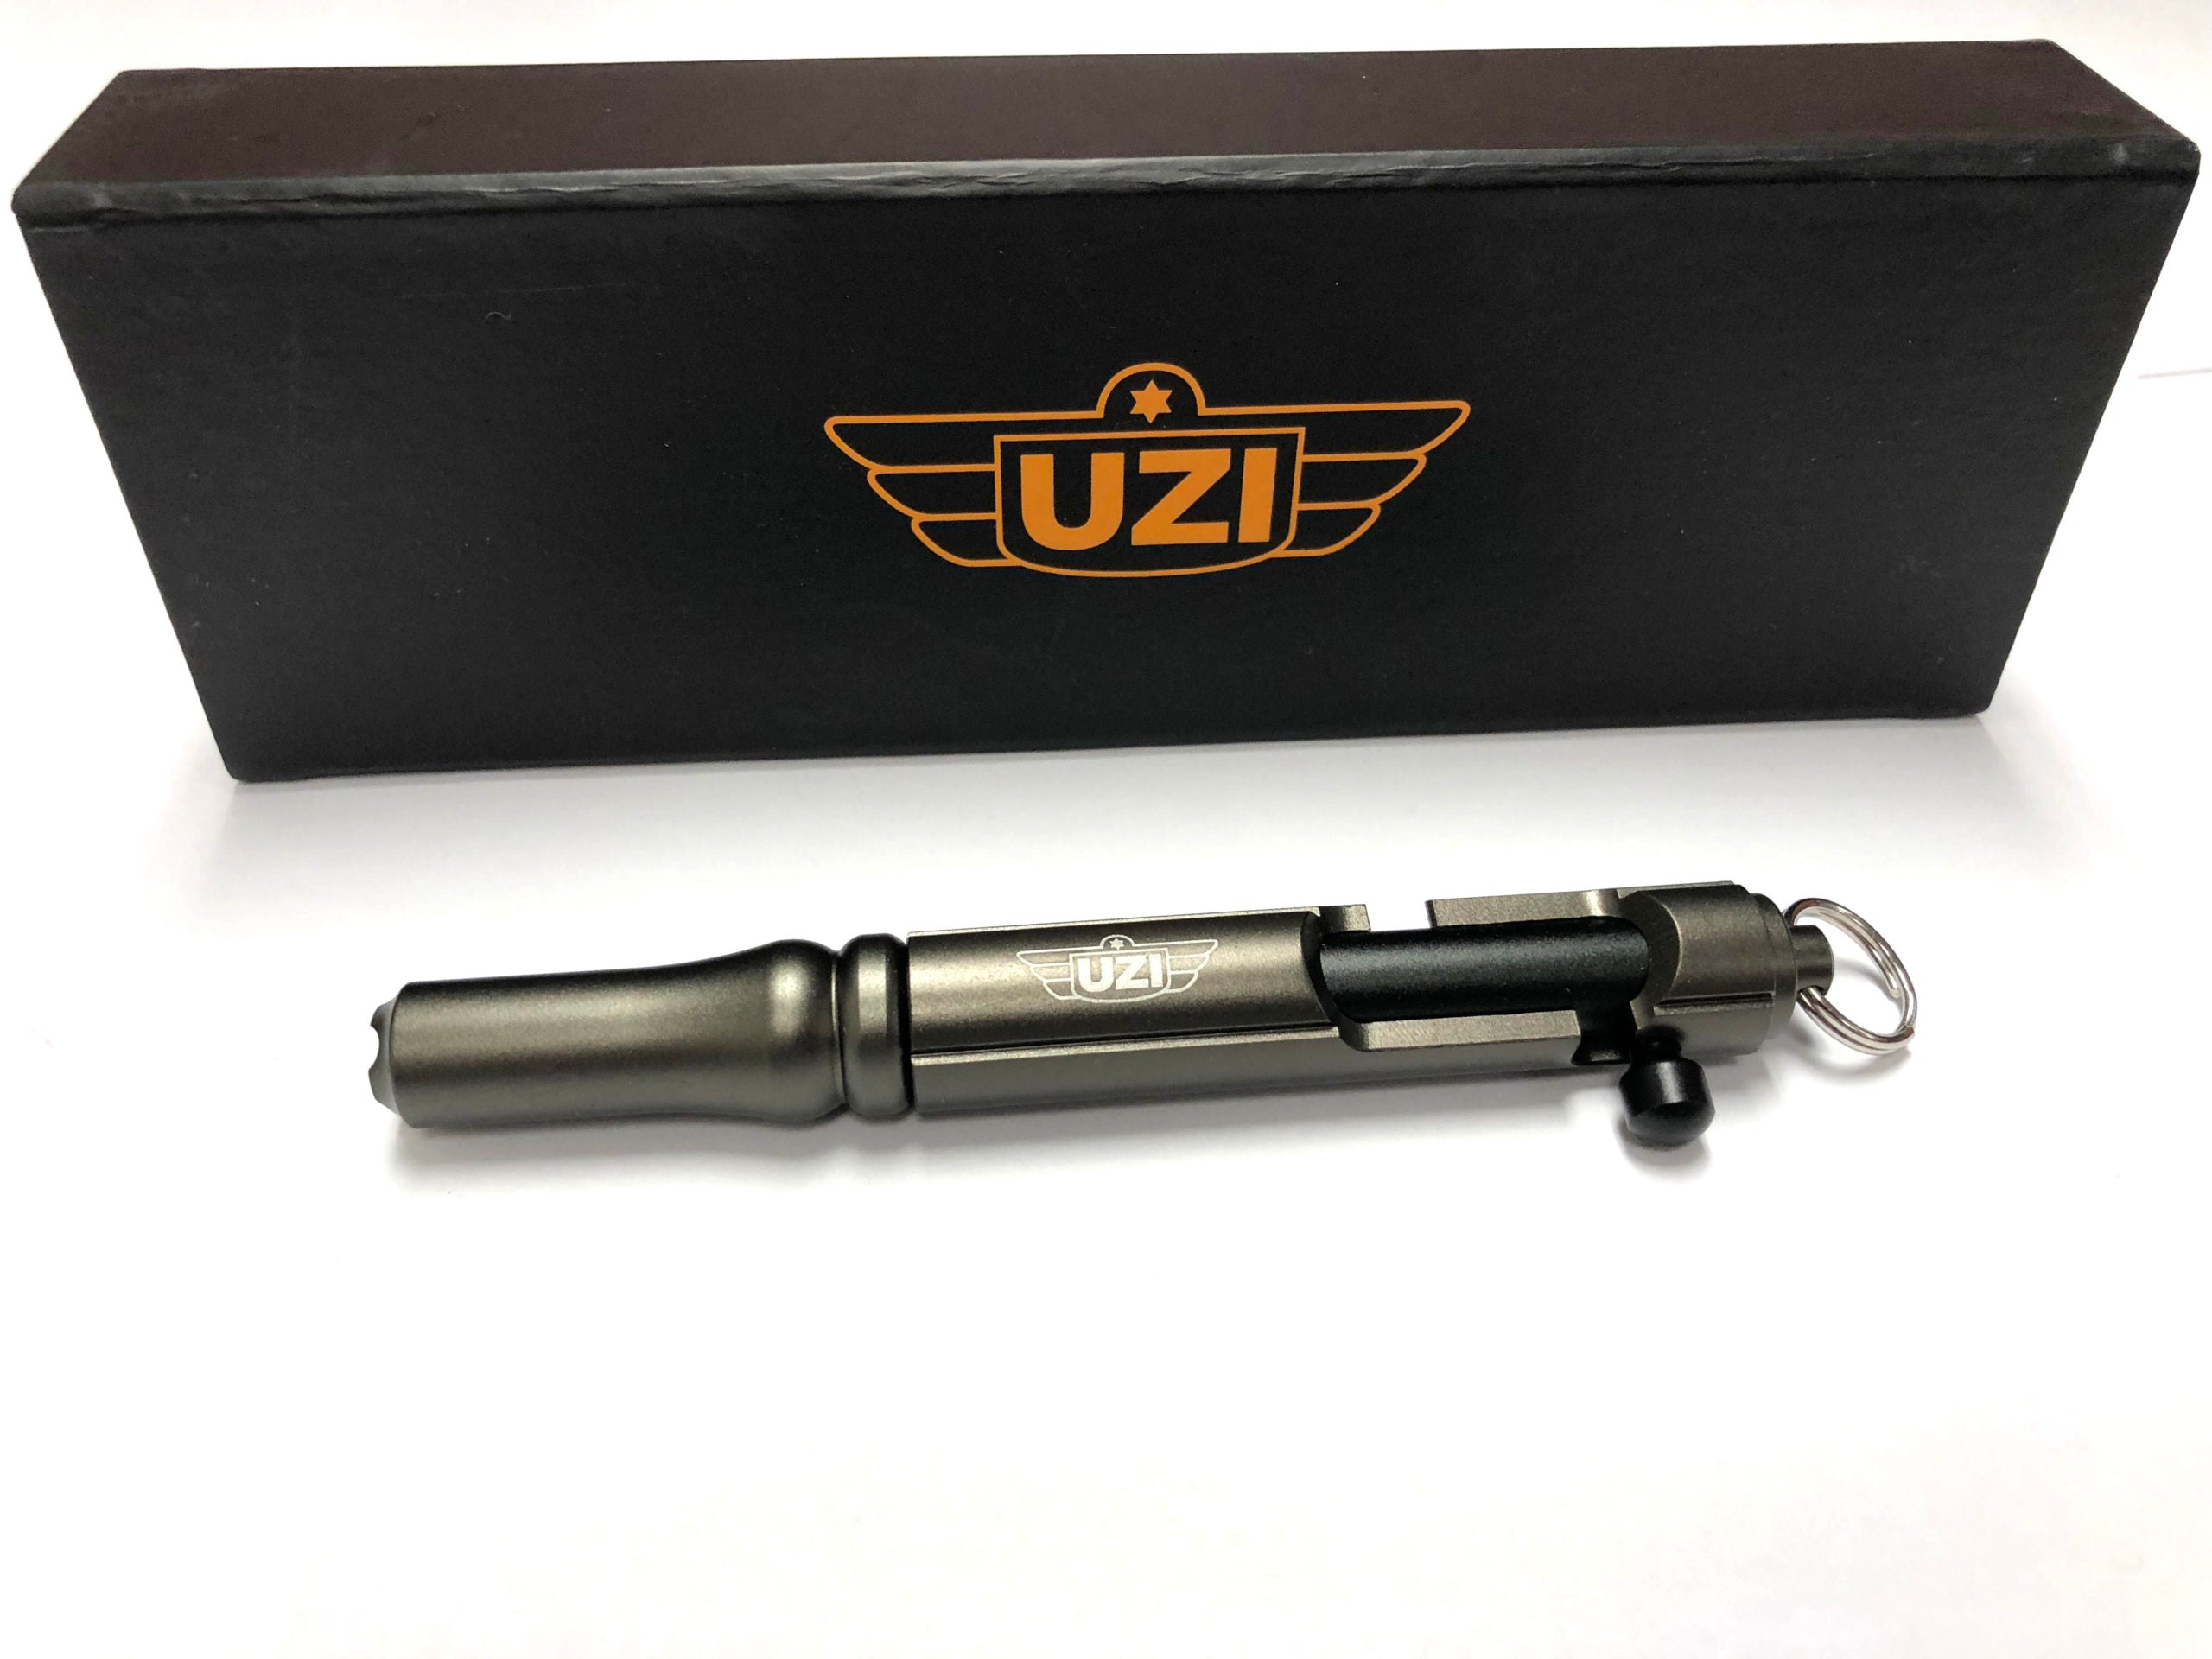 UZI Bolt Action Tactical Pen Large - Gun Metal